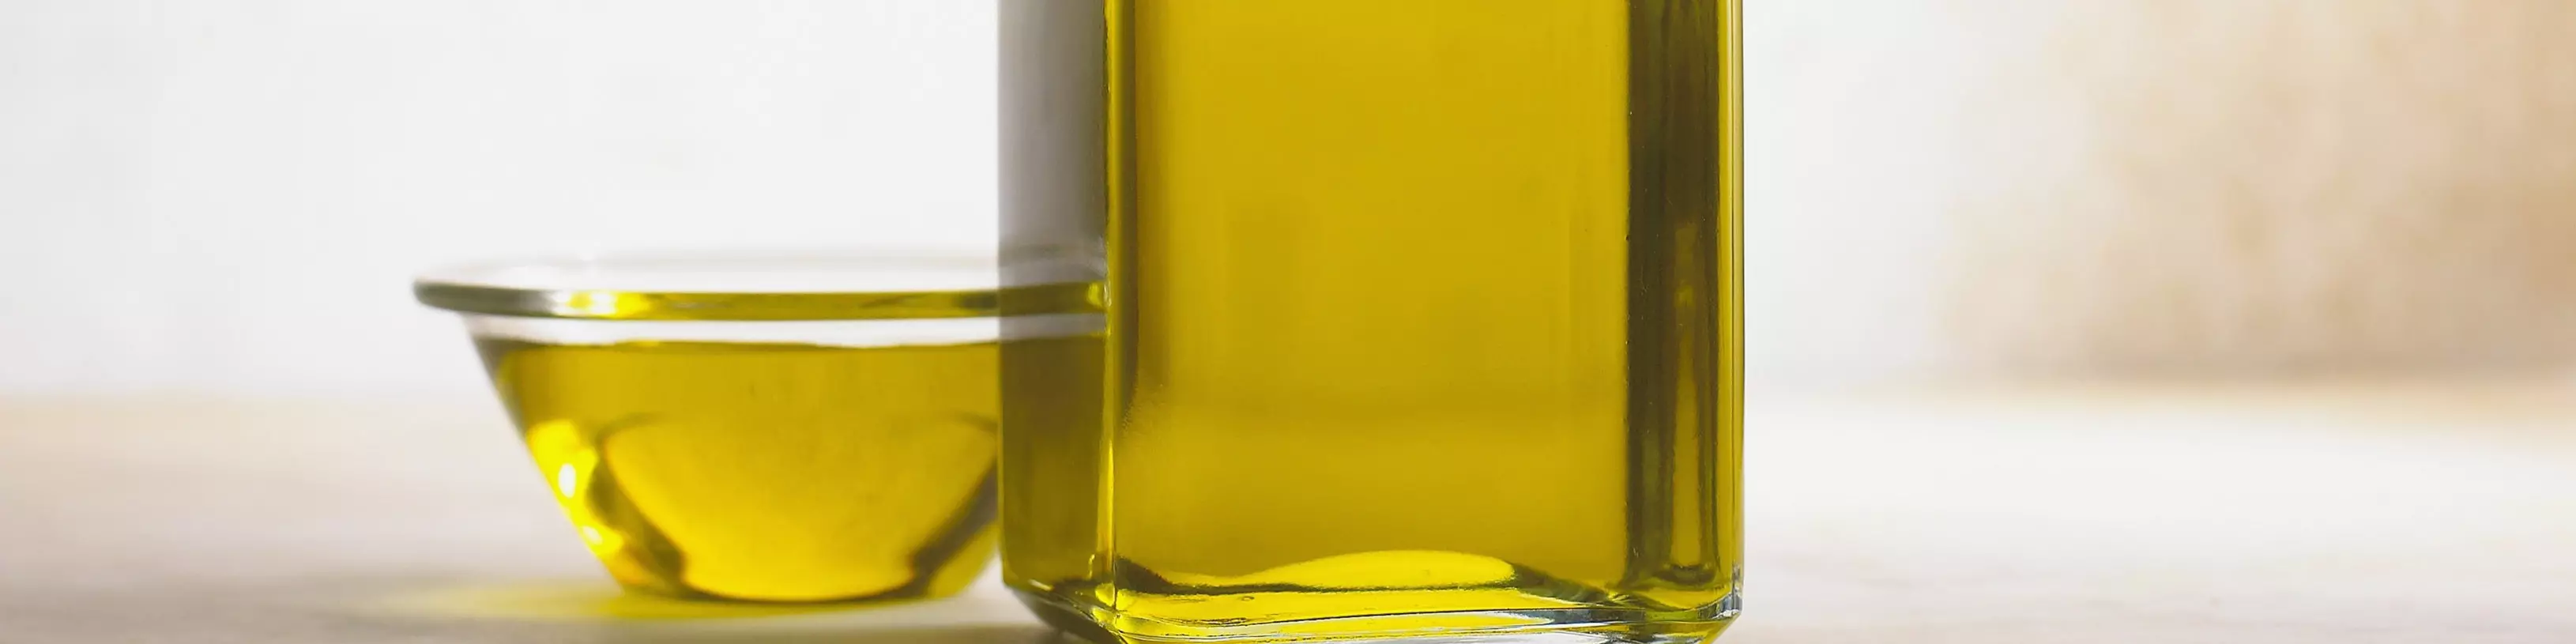 Sensorik-Lizenz Olivenöl